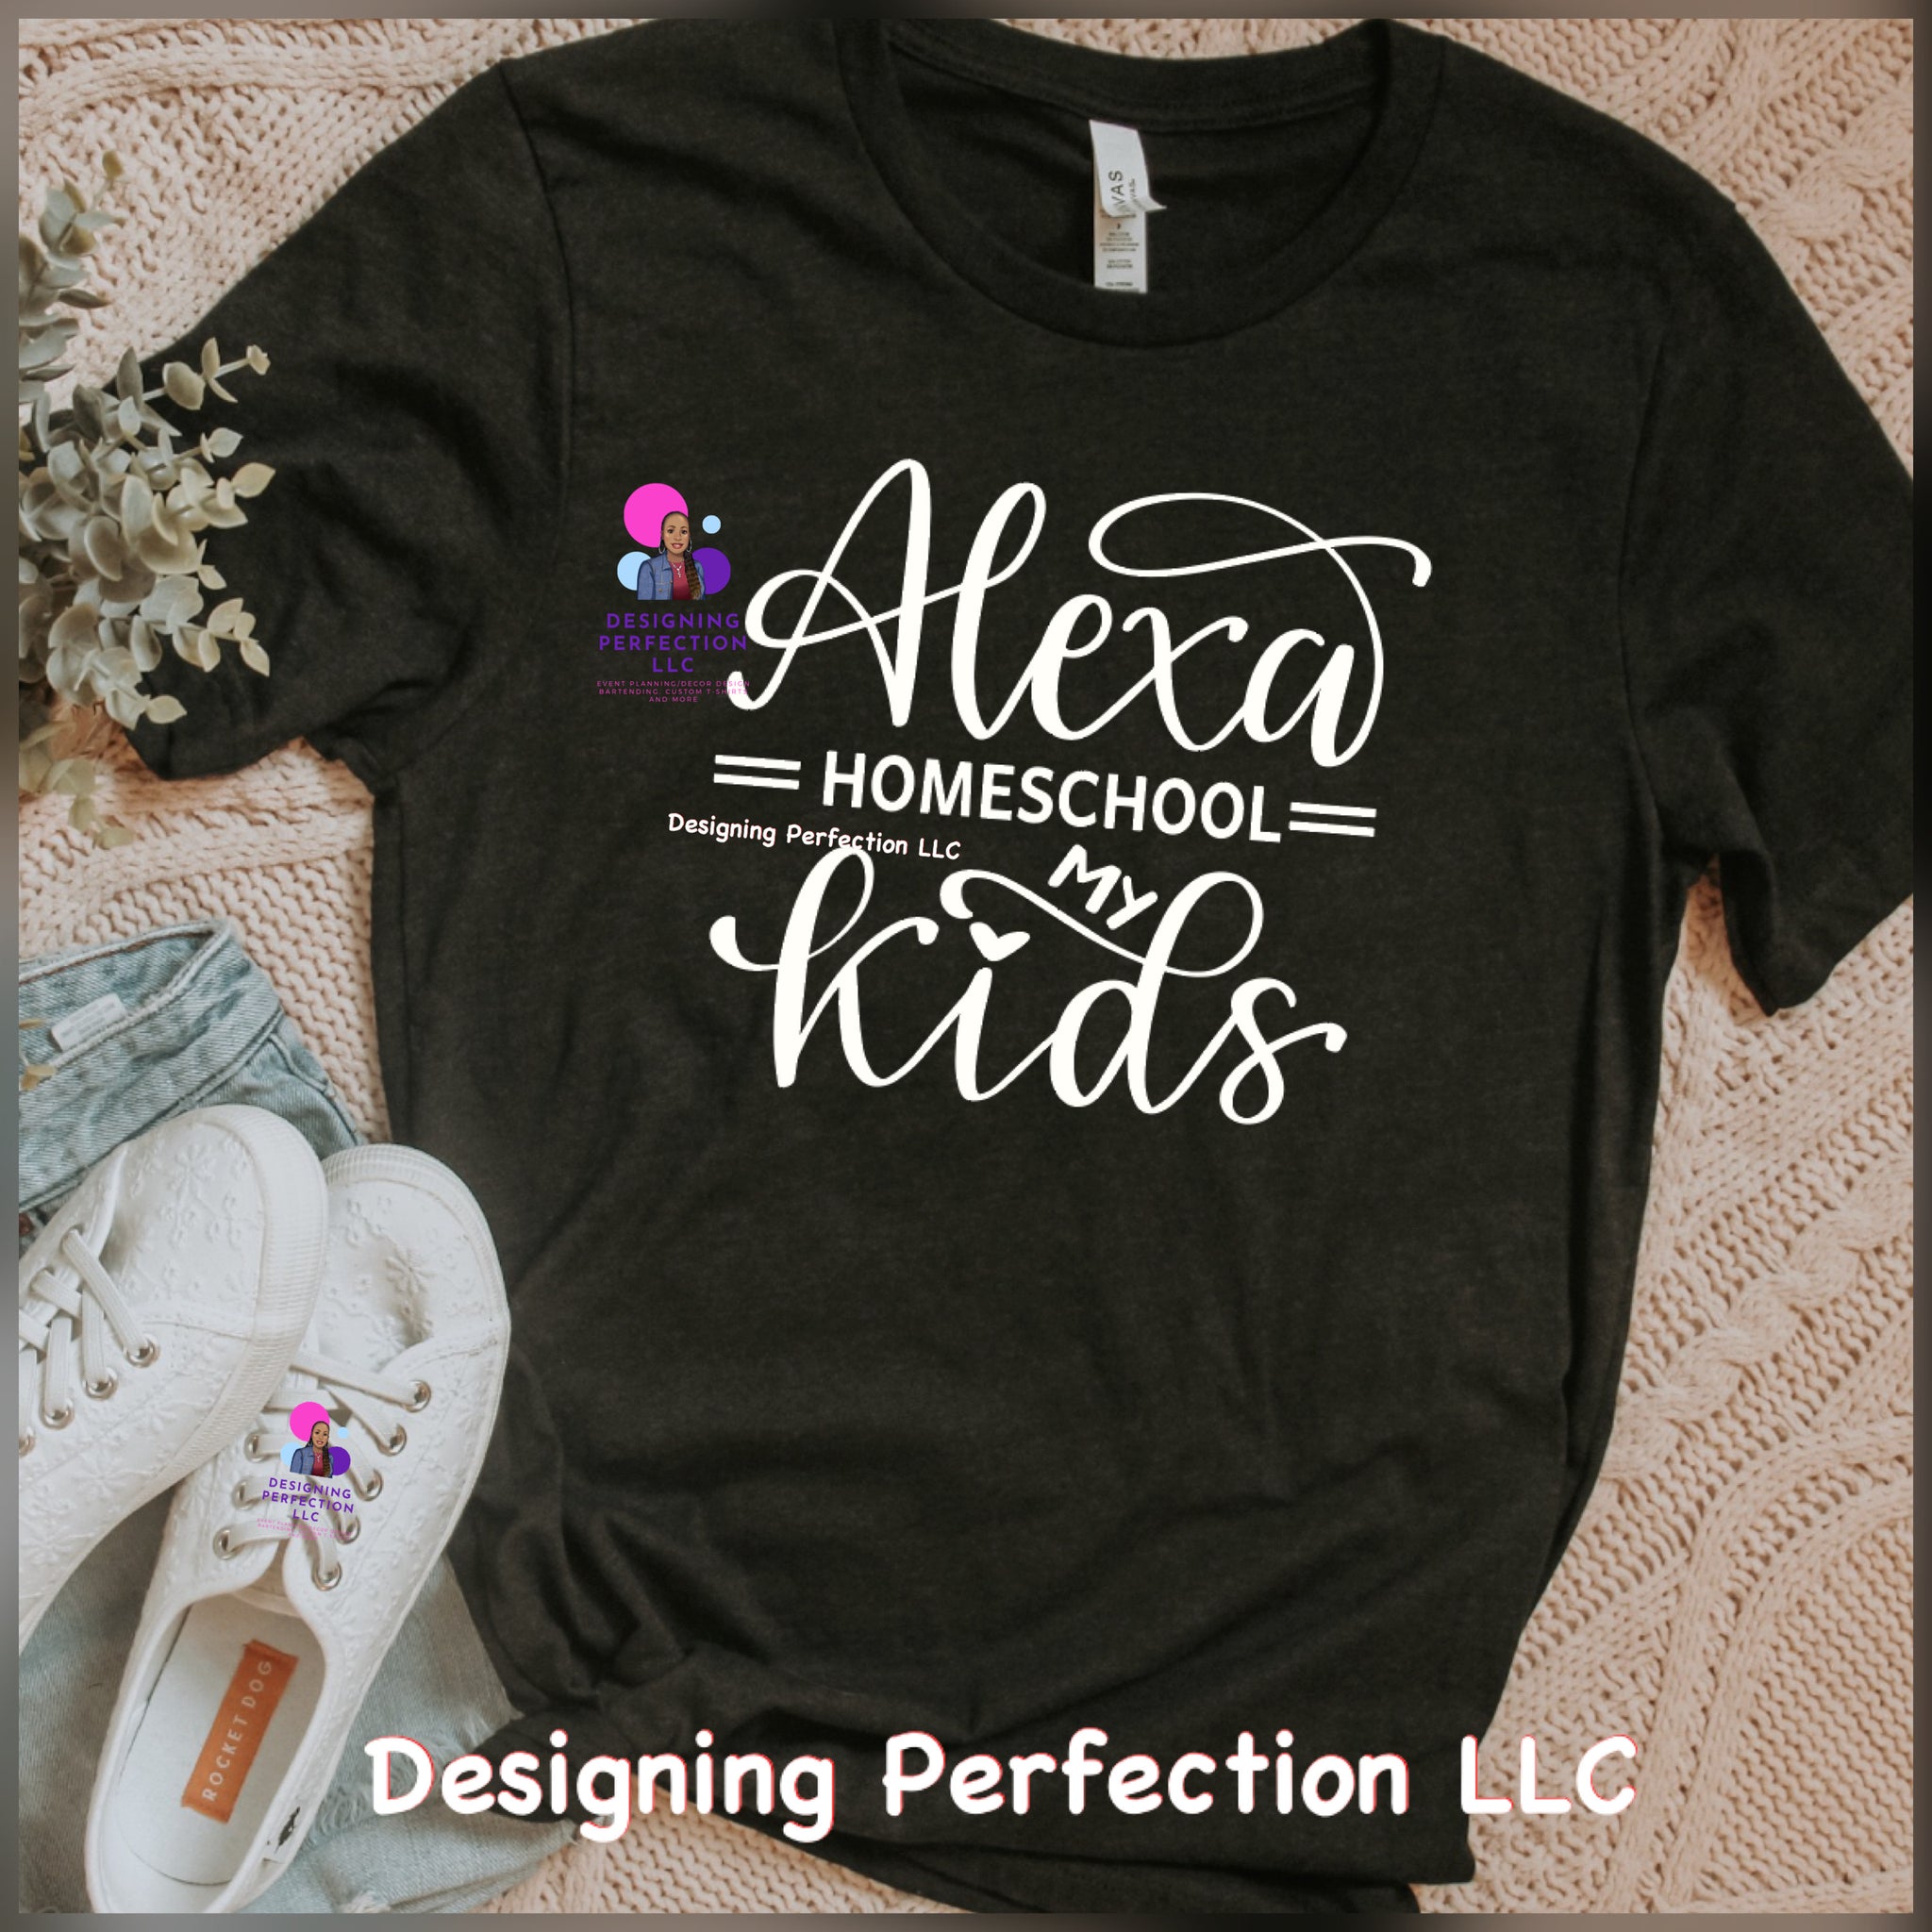 Alexa Homeschool the Kids! (10)